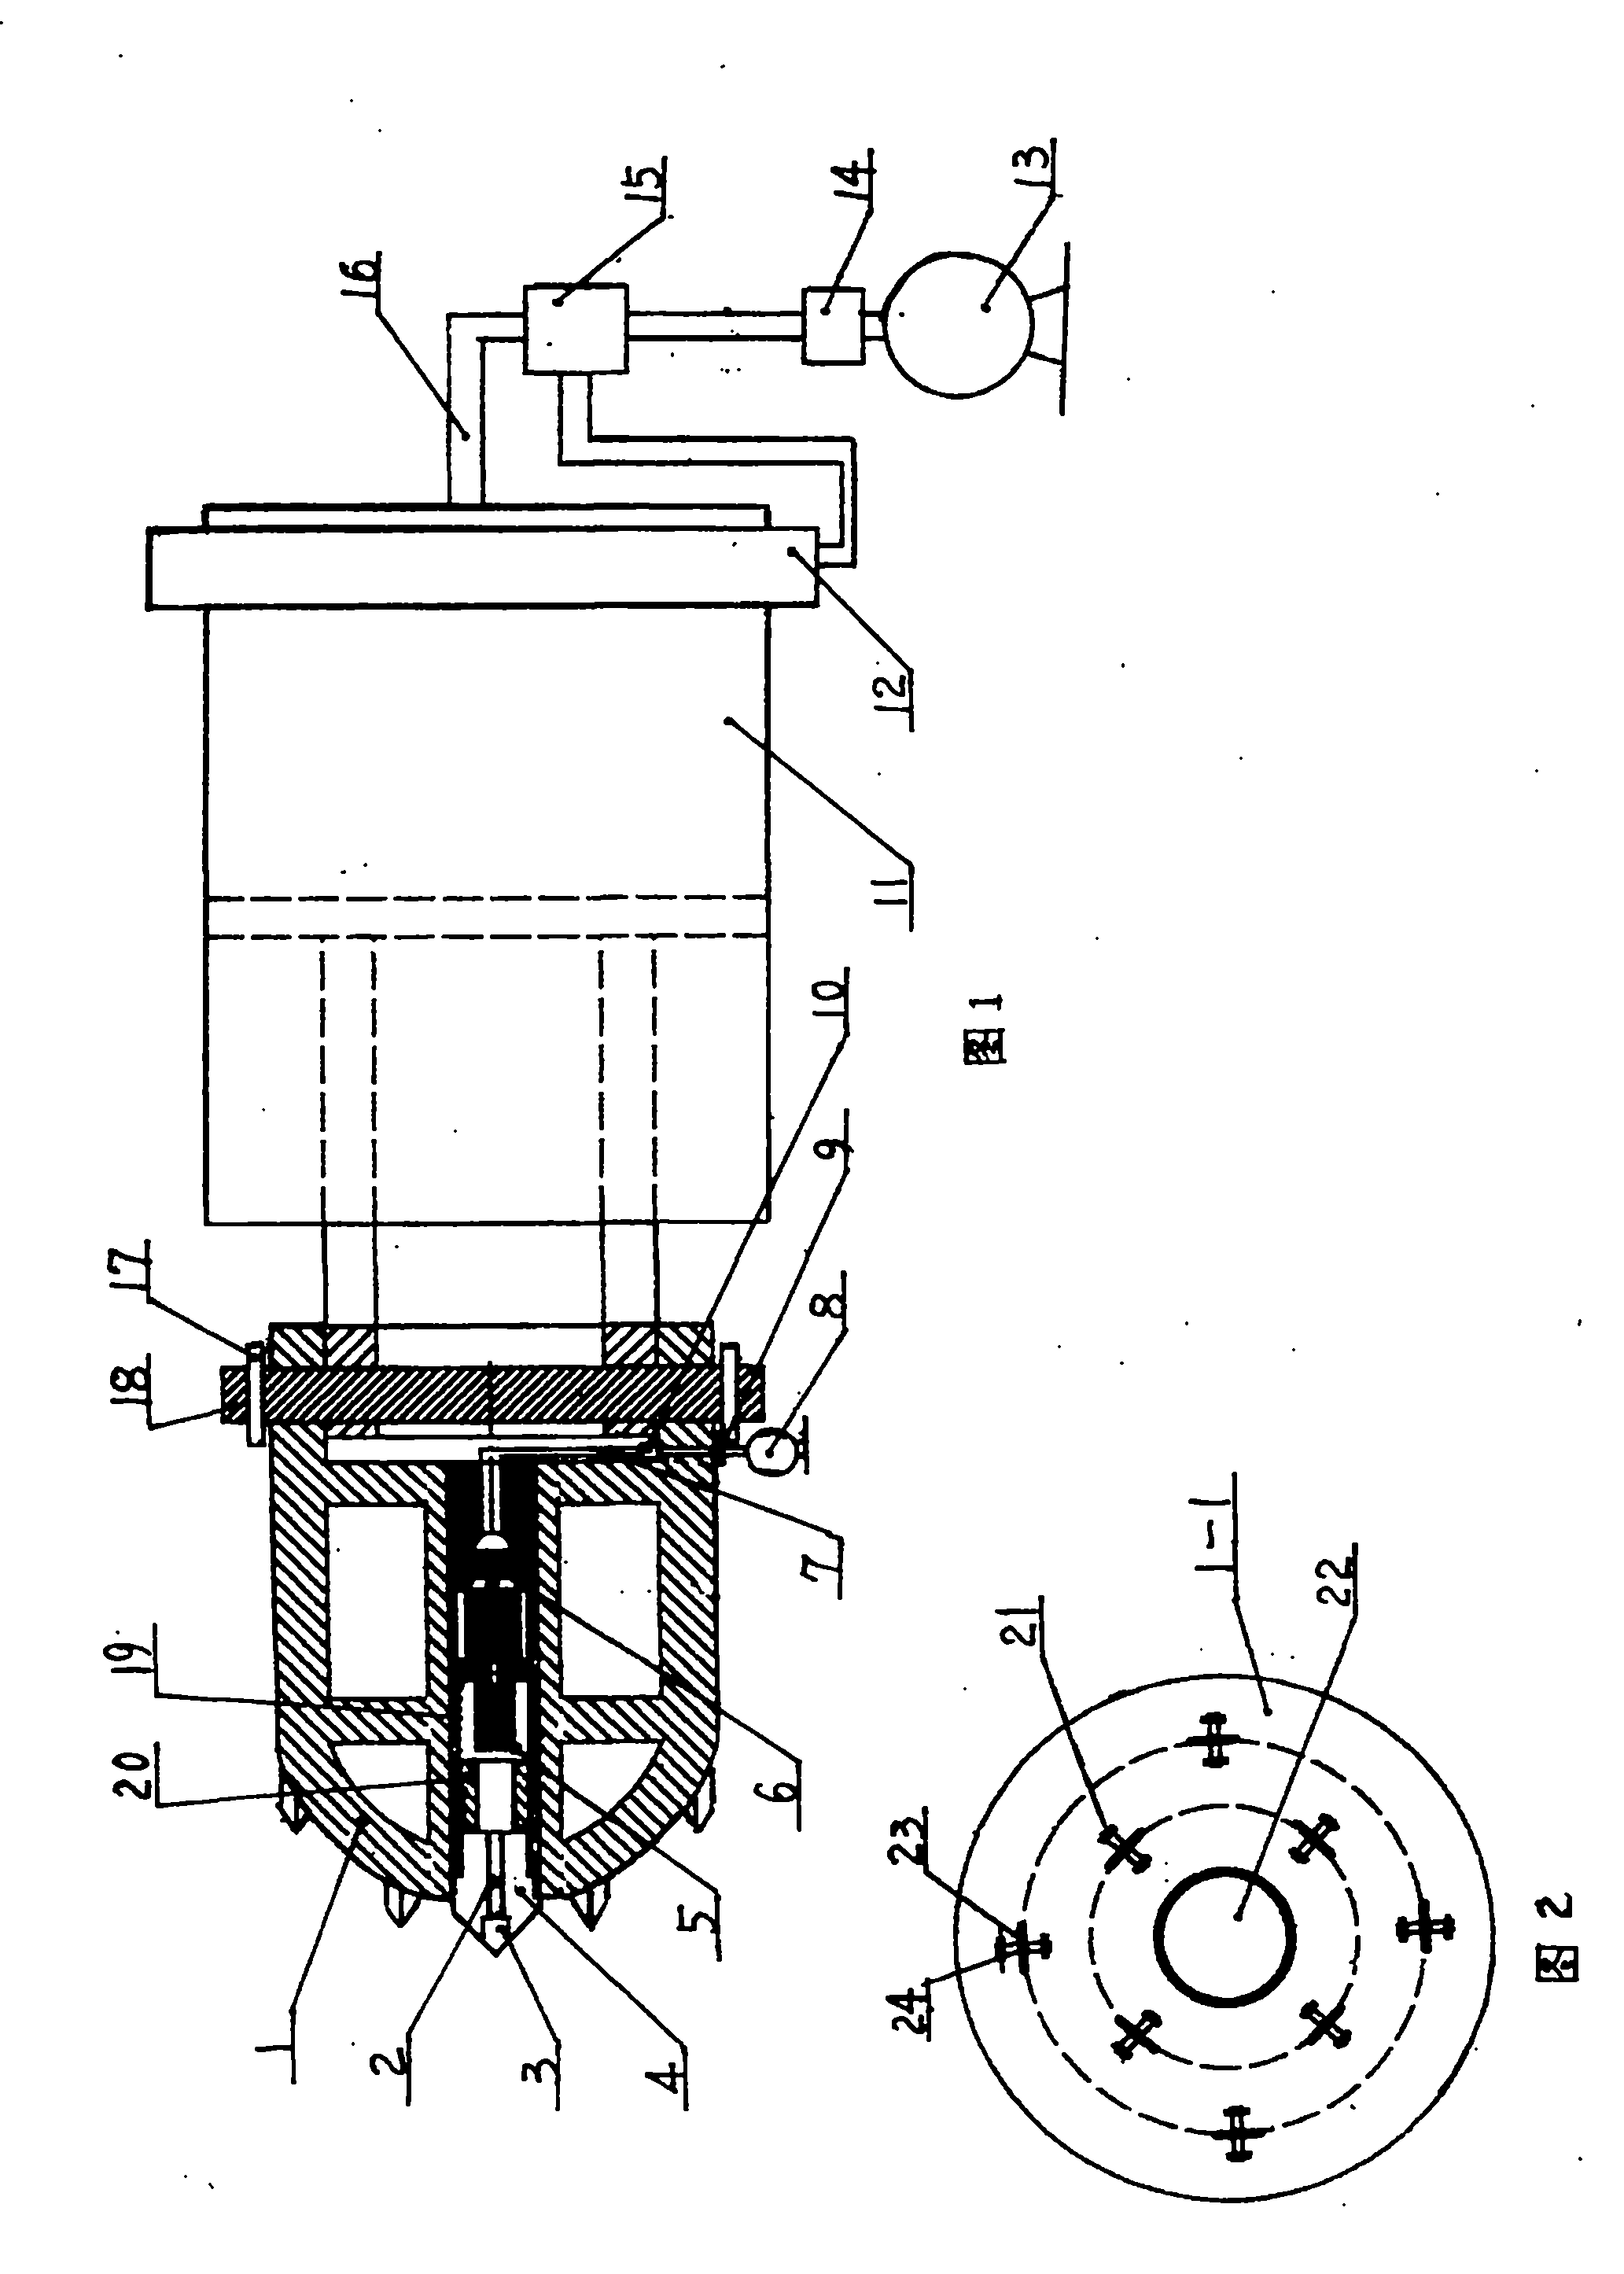 Adaptive hard-rock impact rotary crushing system